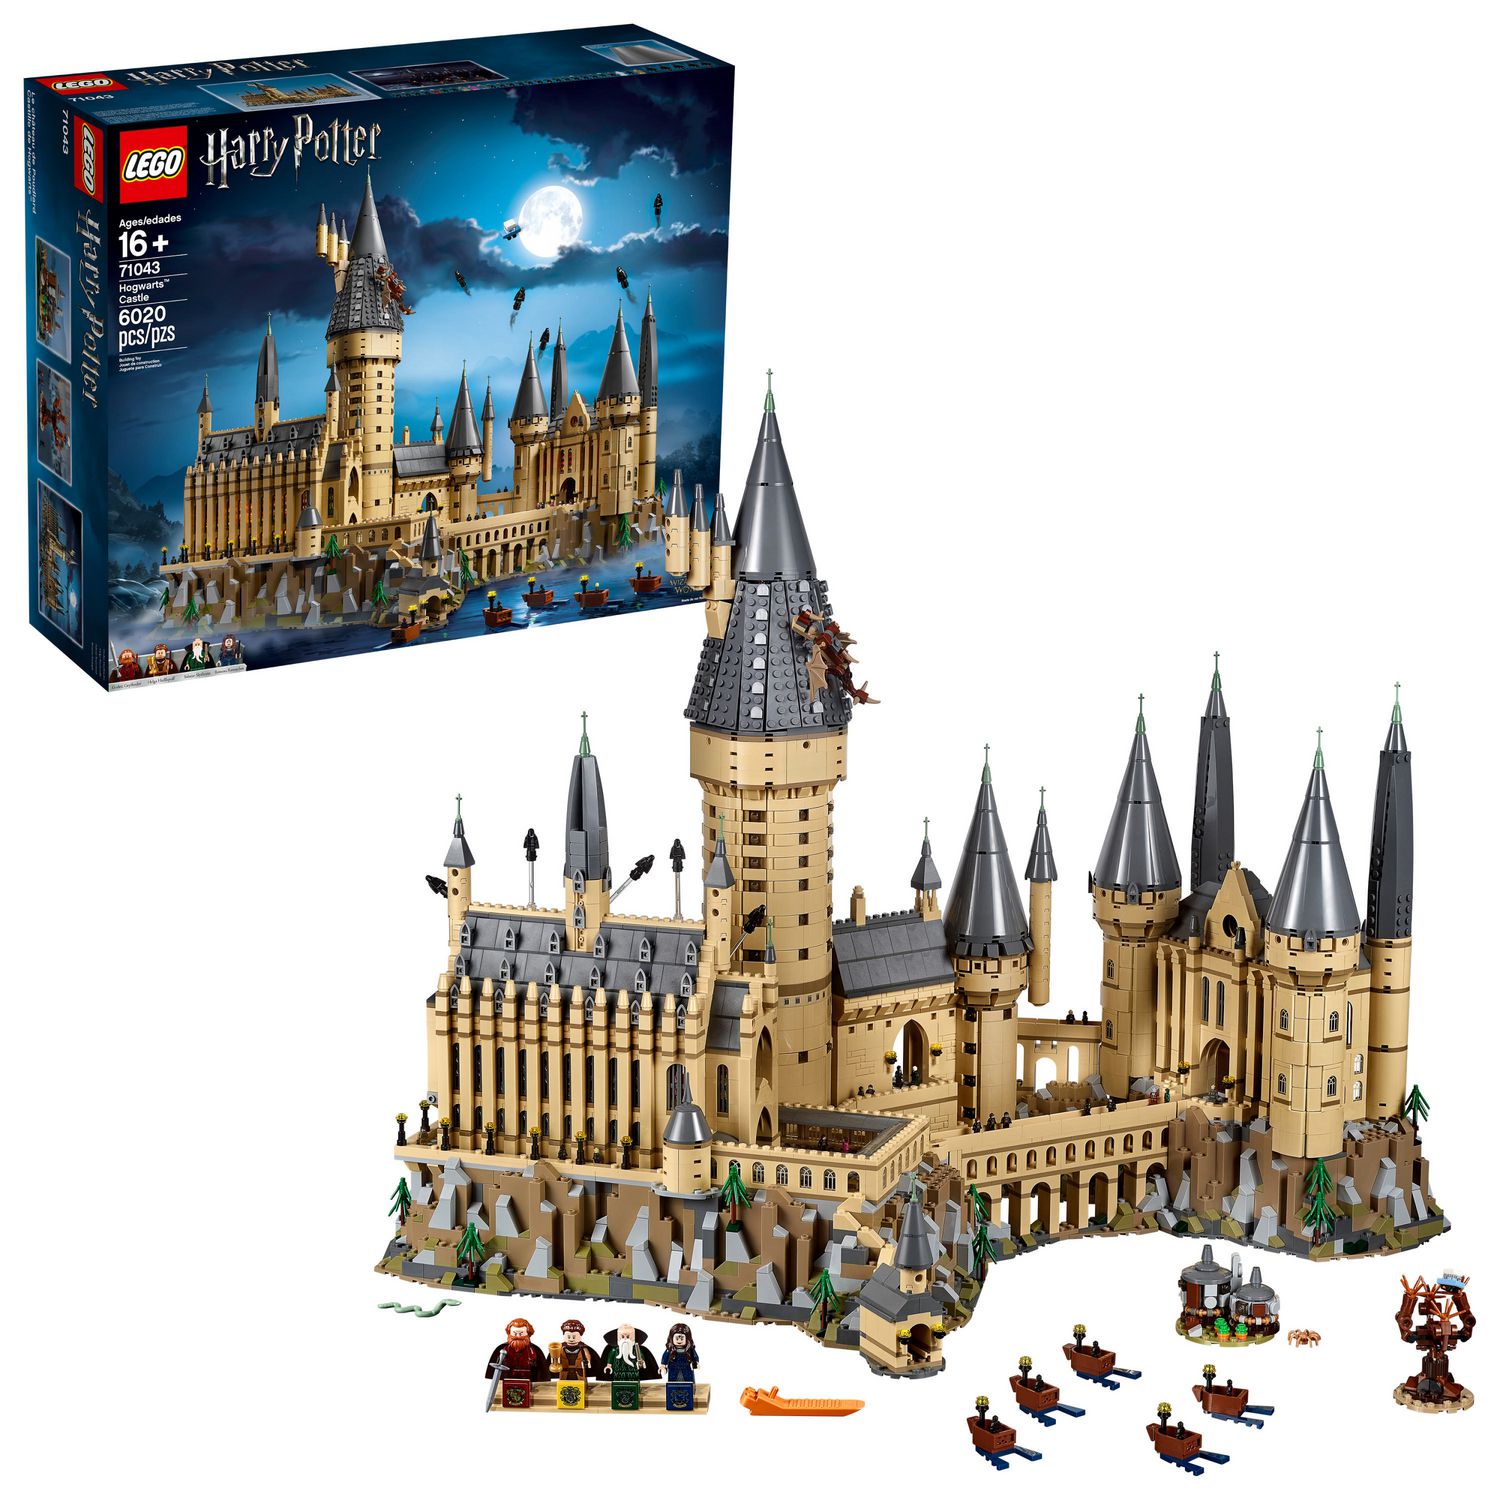 harry potter lego castle 71043